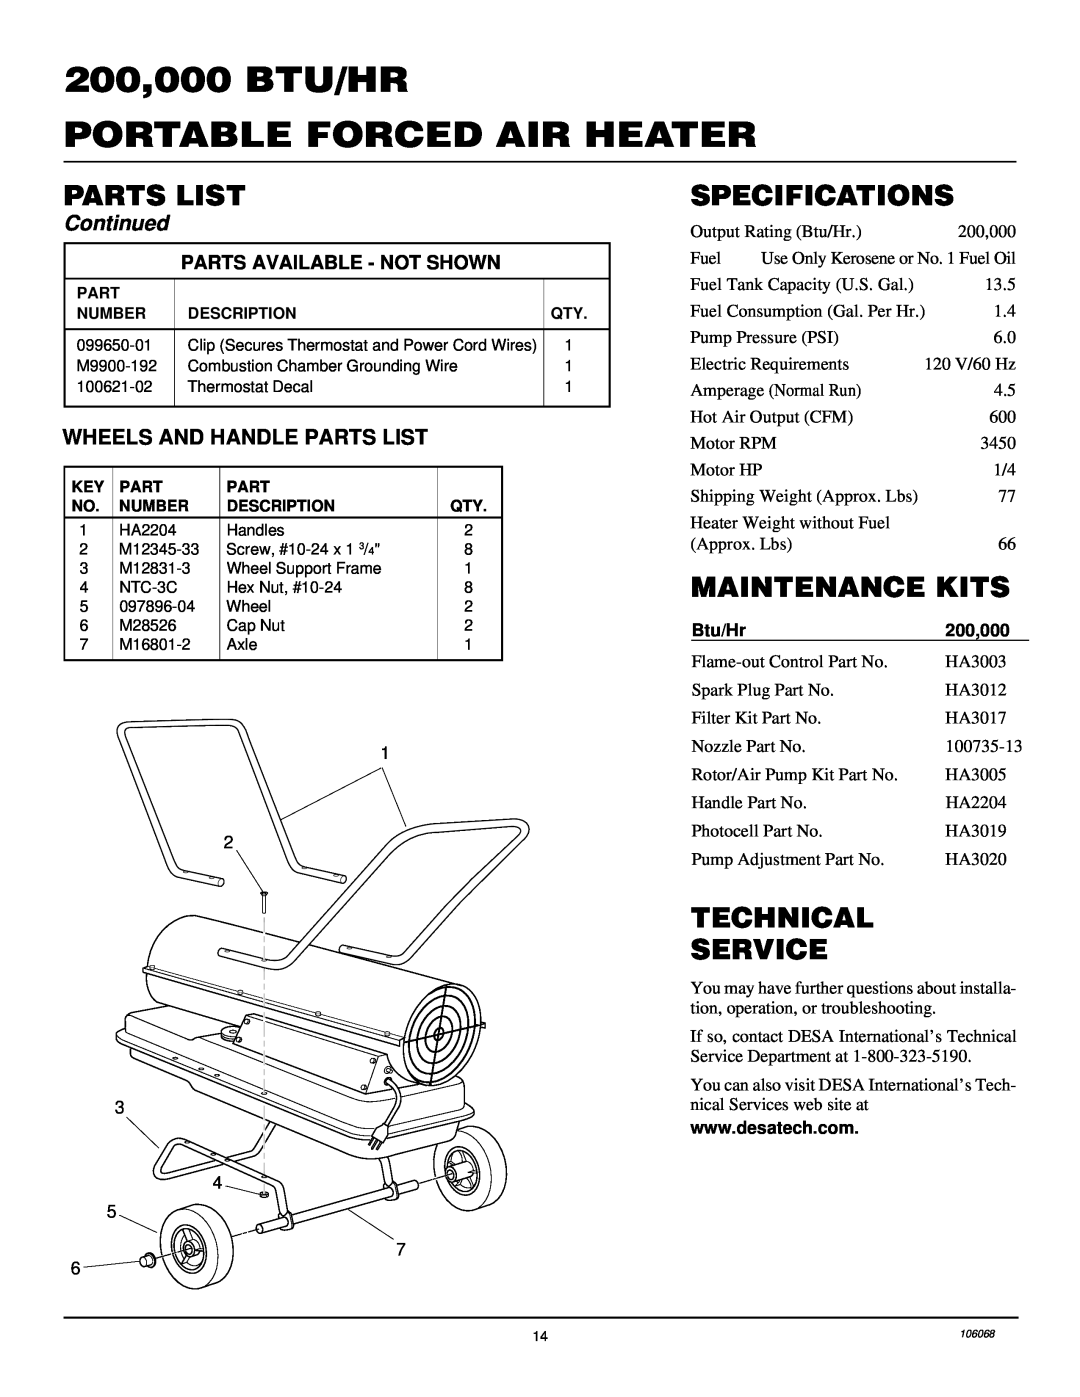 Desa REM200T Specifications, Maintenance Kits, Technical Service, Wheels And Handle Parts List, Btu/Hr, 200,000, Continued 